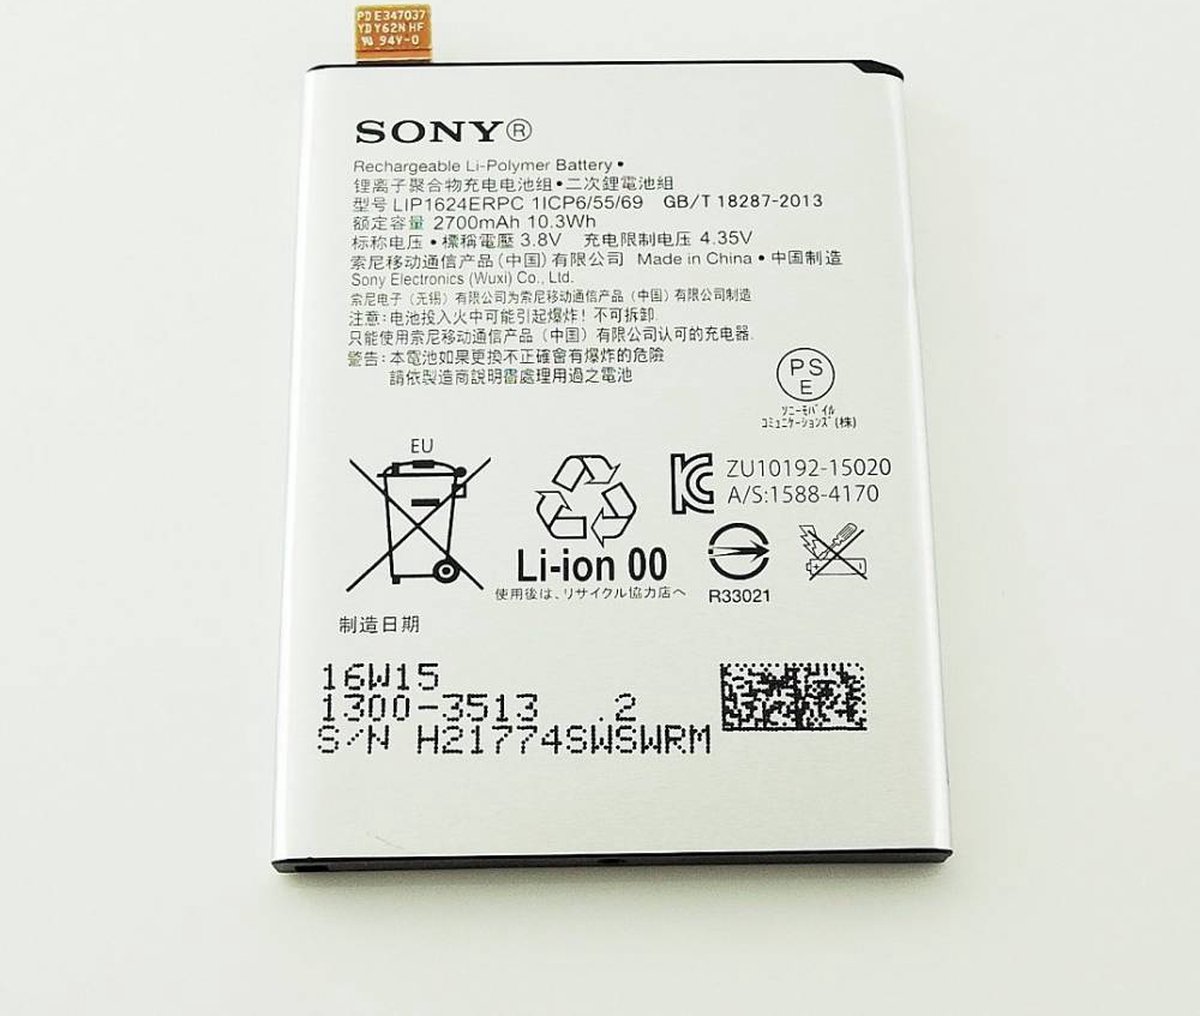 Sony Accu, LIP1624ERPC, 2700mAh, 1300-3513